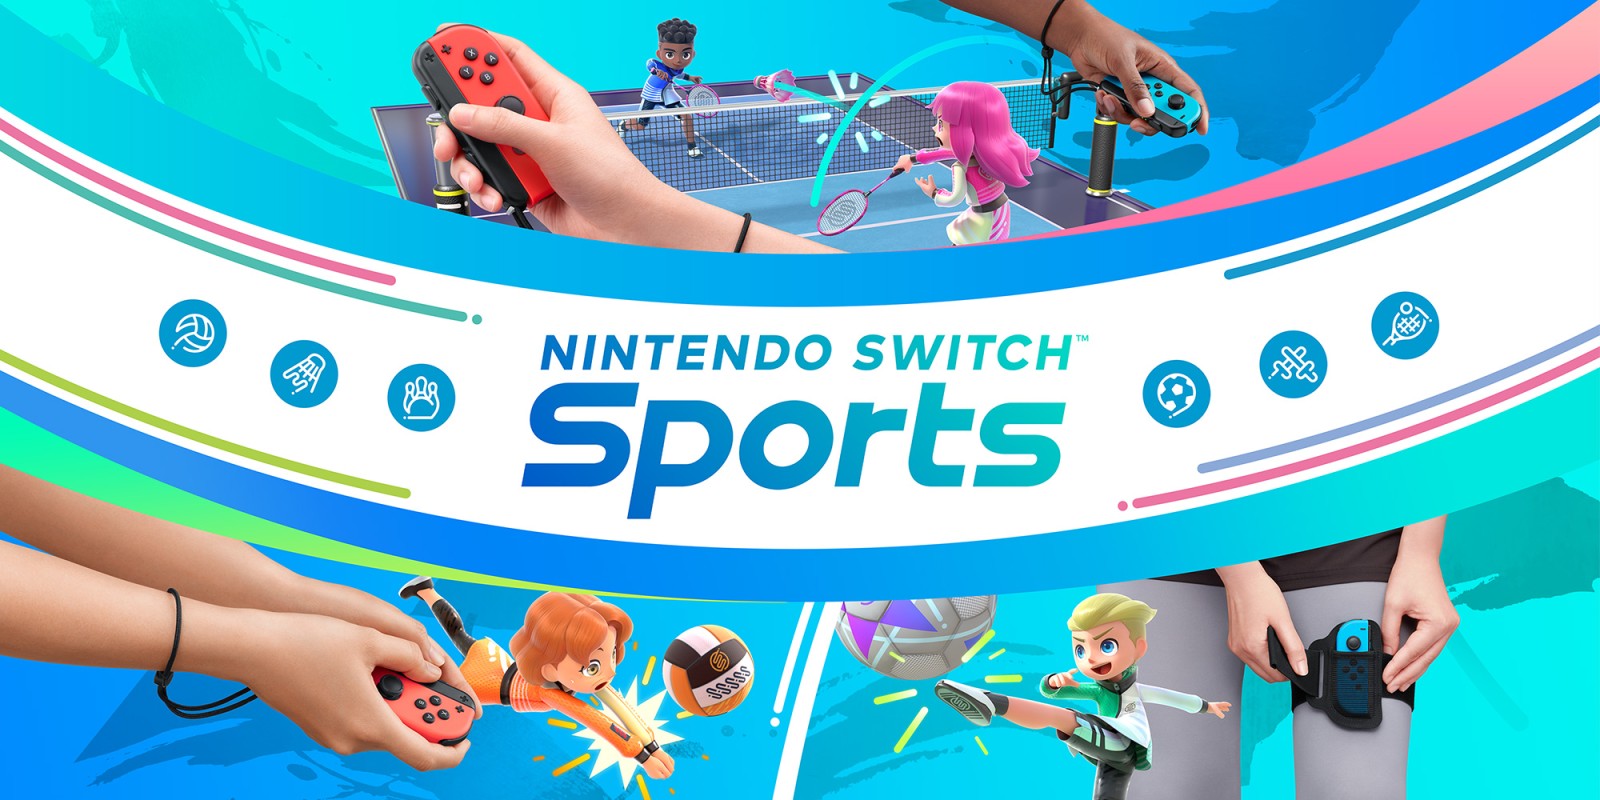 Recomendado ala techo Nintendo Switch Sports | Juegos de Nintendo Switch | Juegos | Nintendo